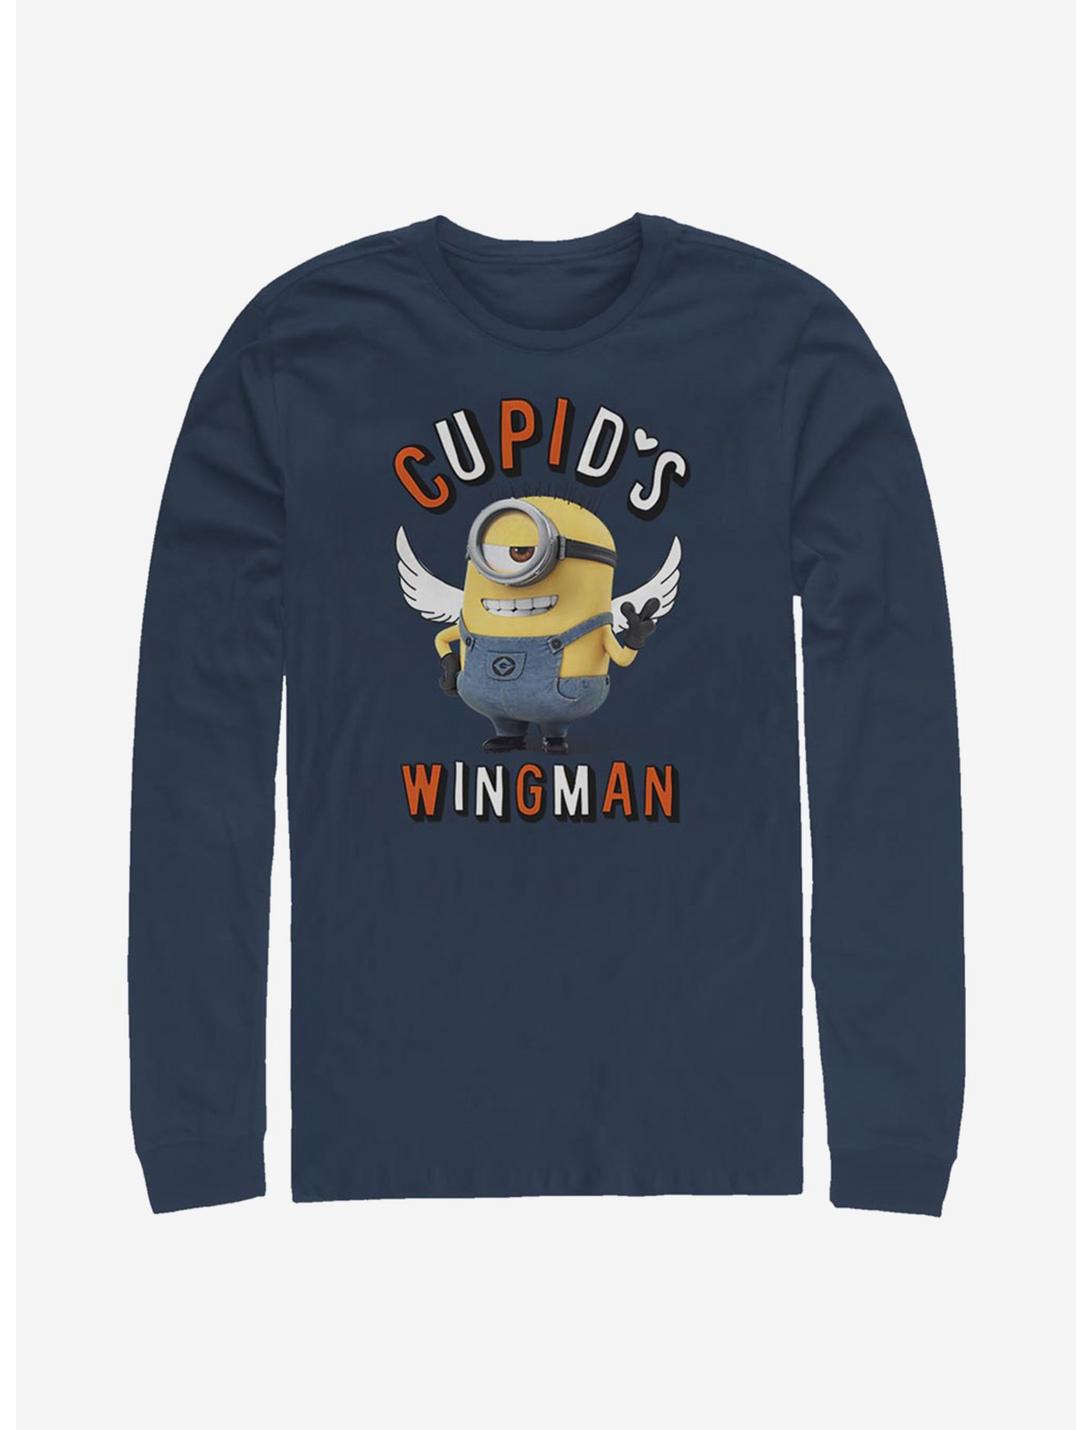 Minions Cupid's Wingman Long-Sleeve T-Shirt, NAVY, hi-res